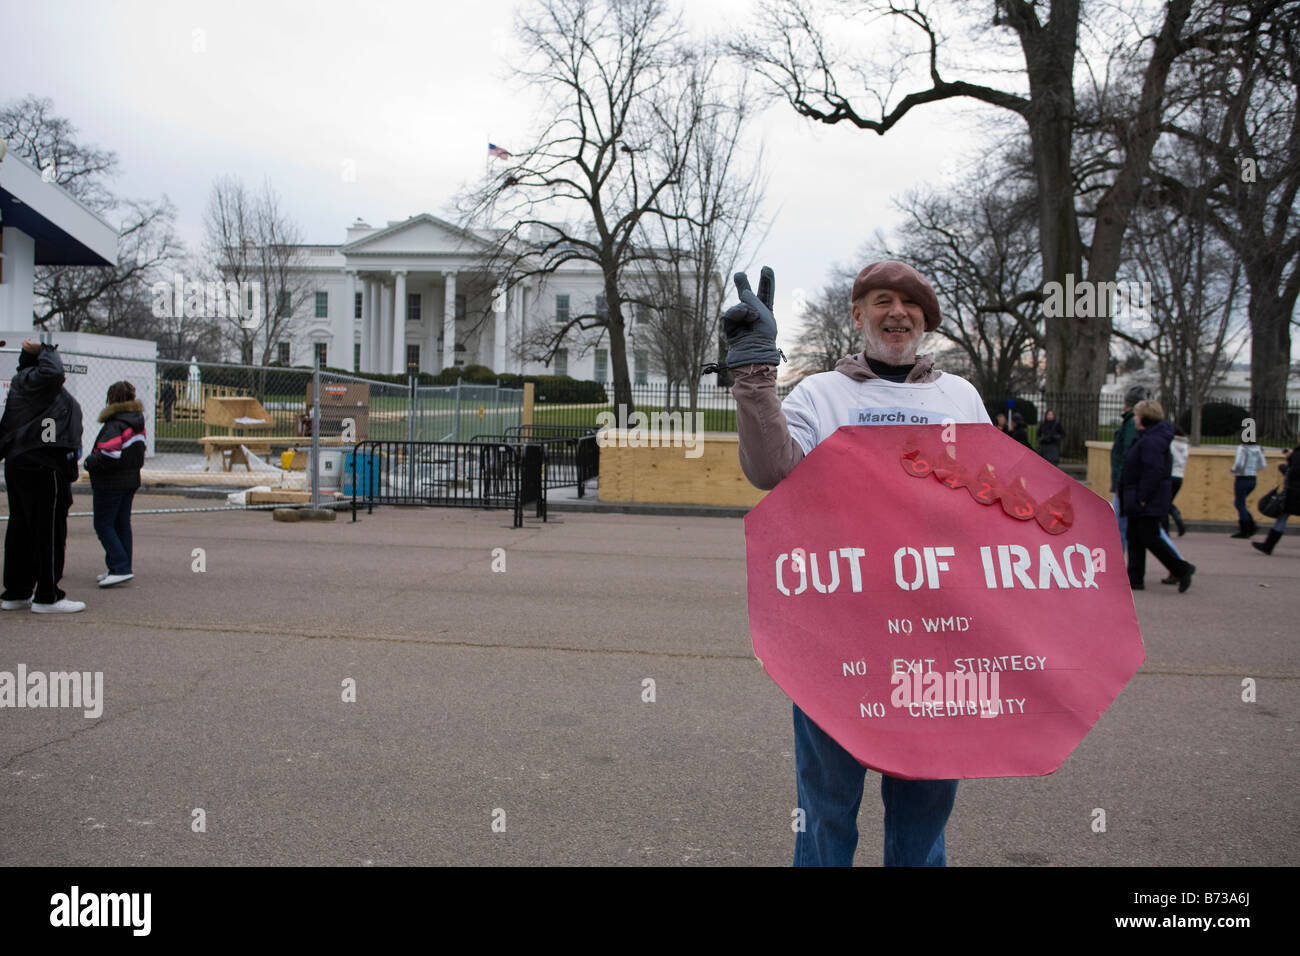 Iraqi war protester - Washington, DC USA Stock Photo